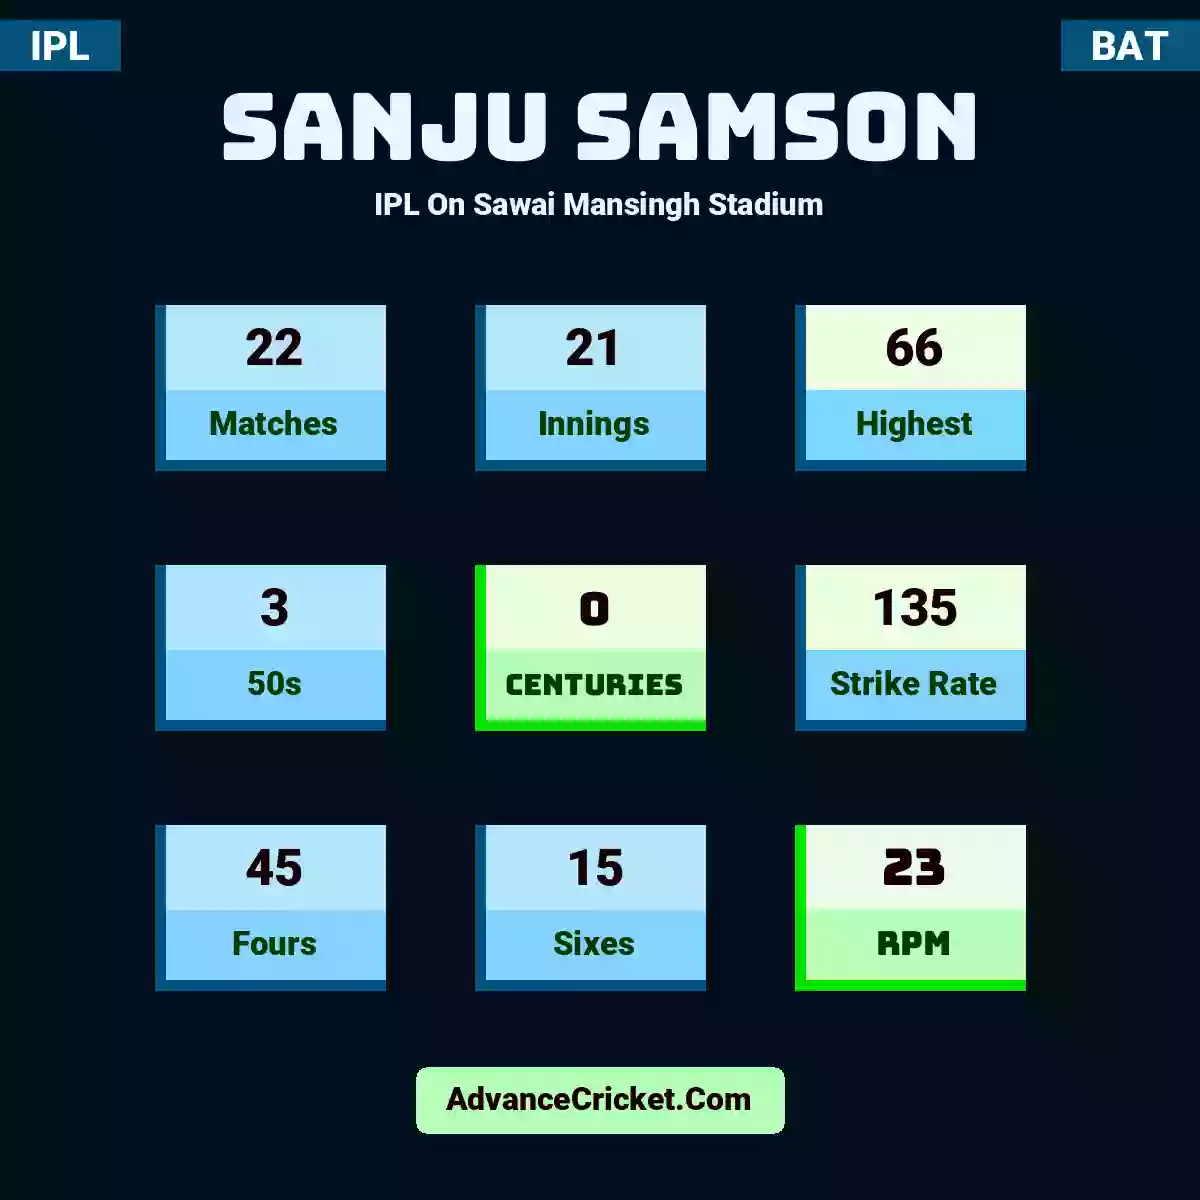 Sanju Samson IPL  On Sawai Mansingh Stadium, Sanju Samson played 22 matches, scored 66 runs as highest, 3 half-centuries, and 0 centuries, with a strike rate of 135. S.Samson hit 45 fours and 15 sixes, with an RPM of 23.